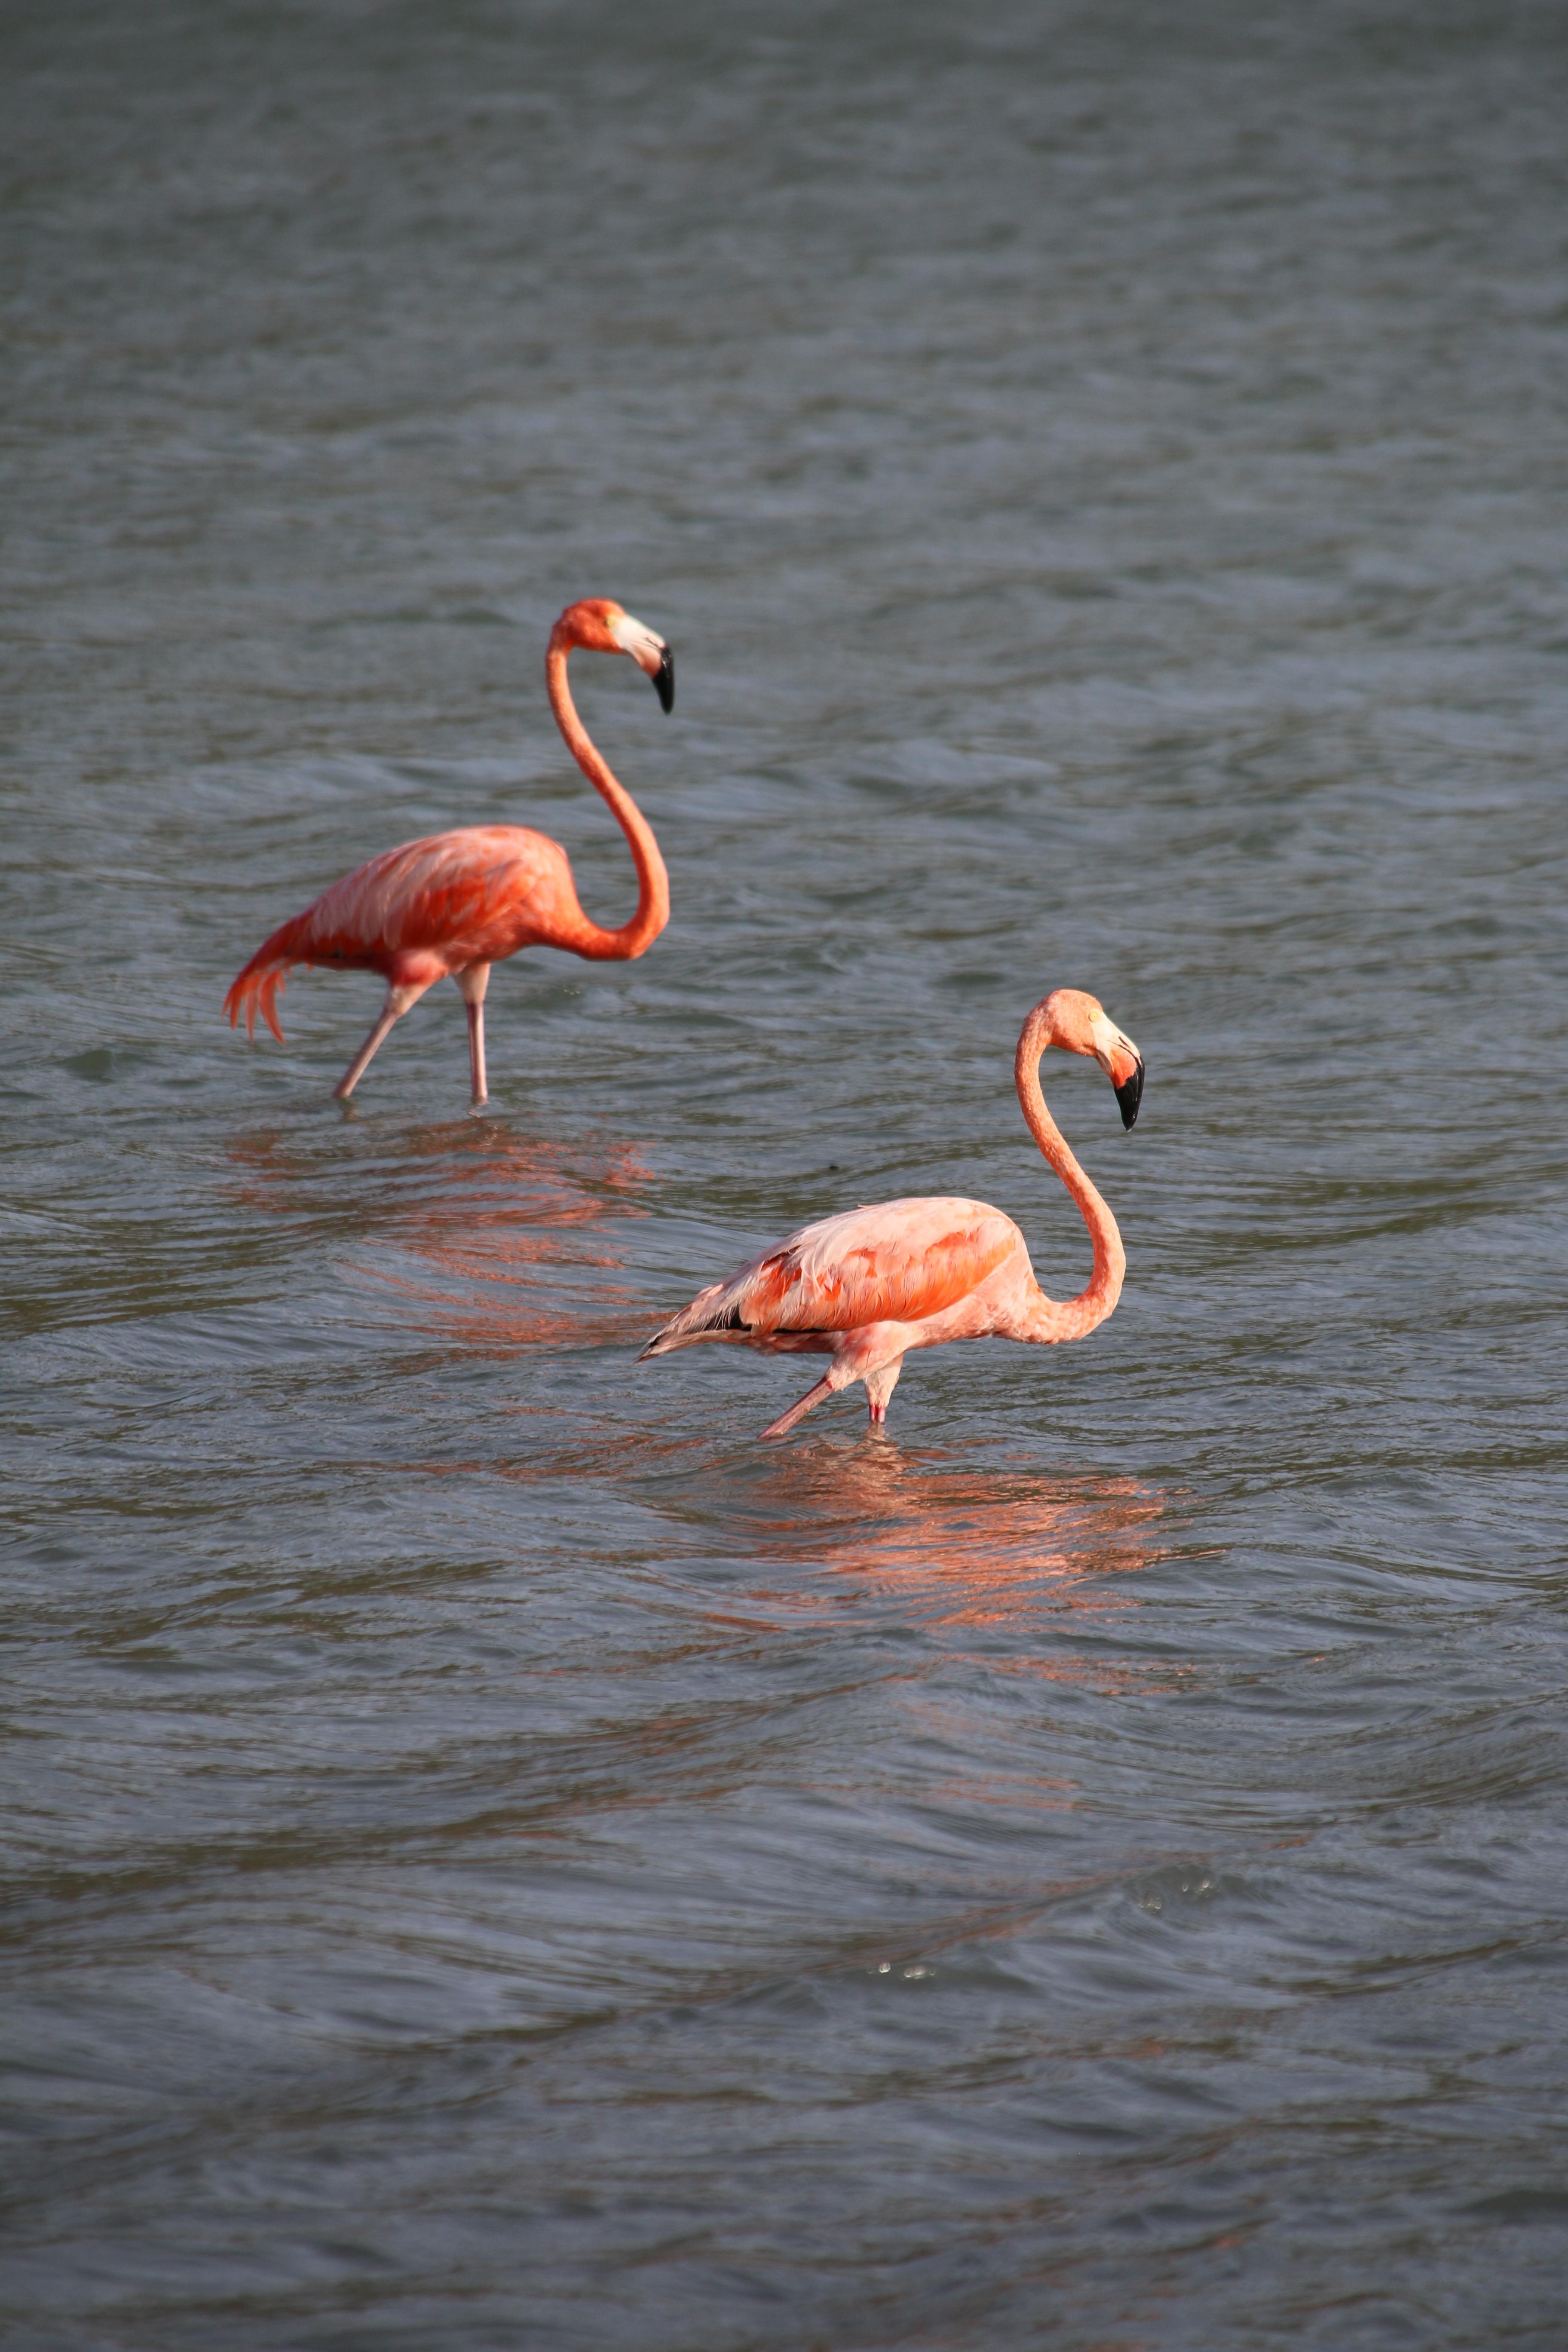 #flamingoliebe #Curacao #travellover
#reisenistmeinemedizin